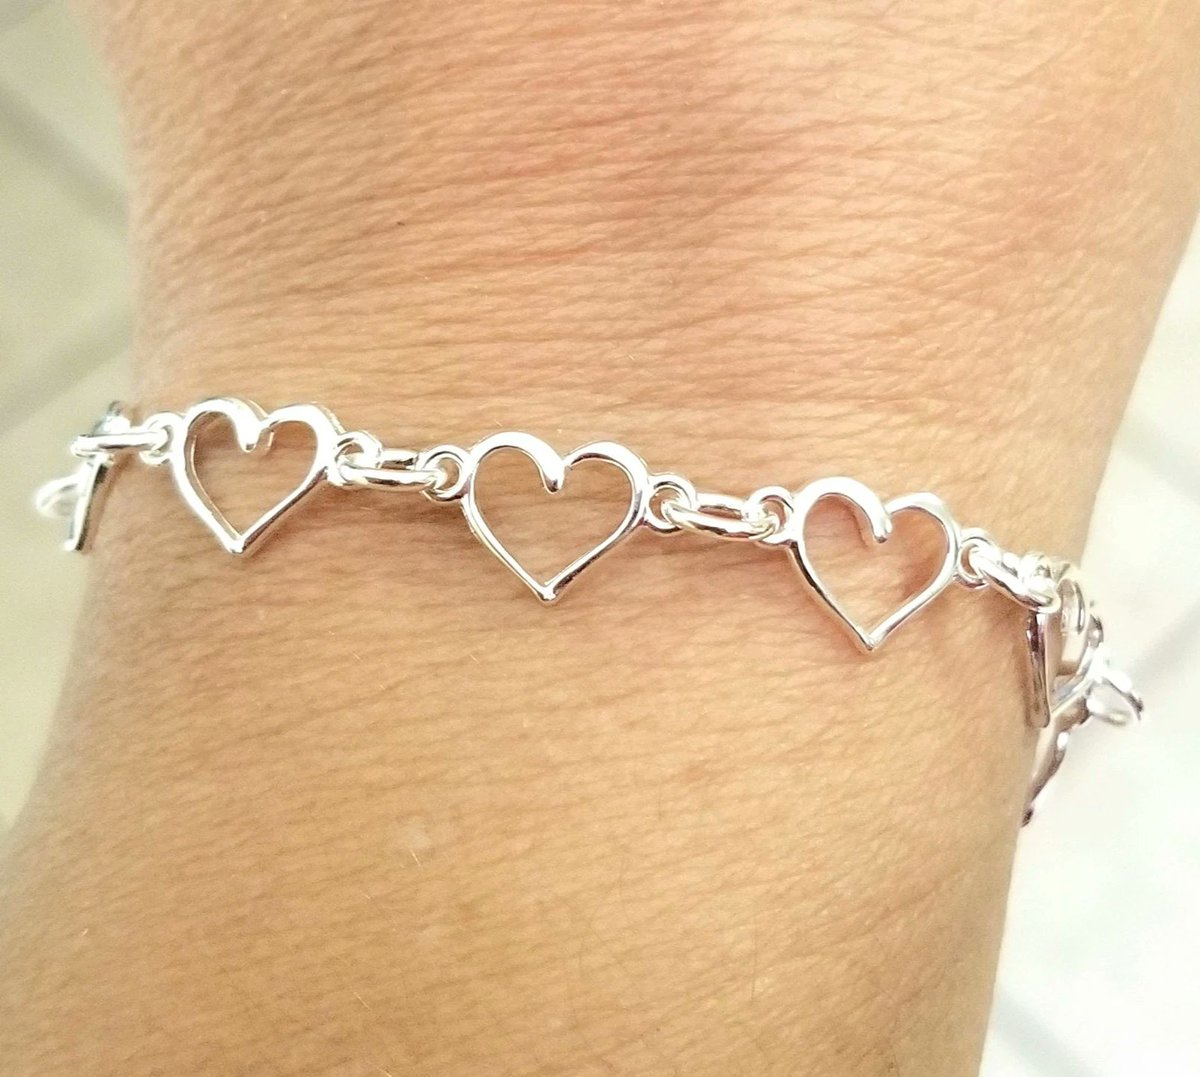 Silver Heart Bracelet, Heart Bracelet for Women, Heart Charm Bracelet #jewelry #bracelet #bracelets #silverbracelet #heartbracelet #giftsforher #giftsformom #momgift #Momgifts #Mothersday #Mothersdaygift #Mothersdaygifts #handmadejewelry #Etsy 

etsy.me/49oWfve via @Etsy